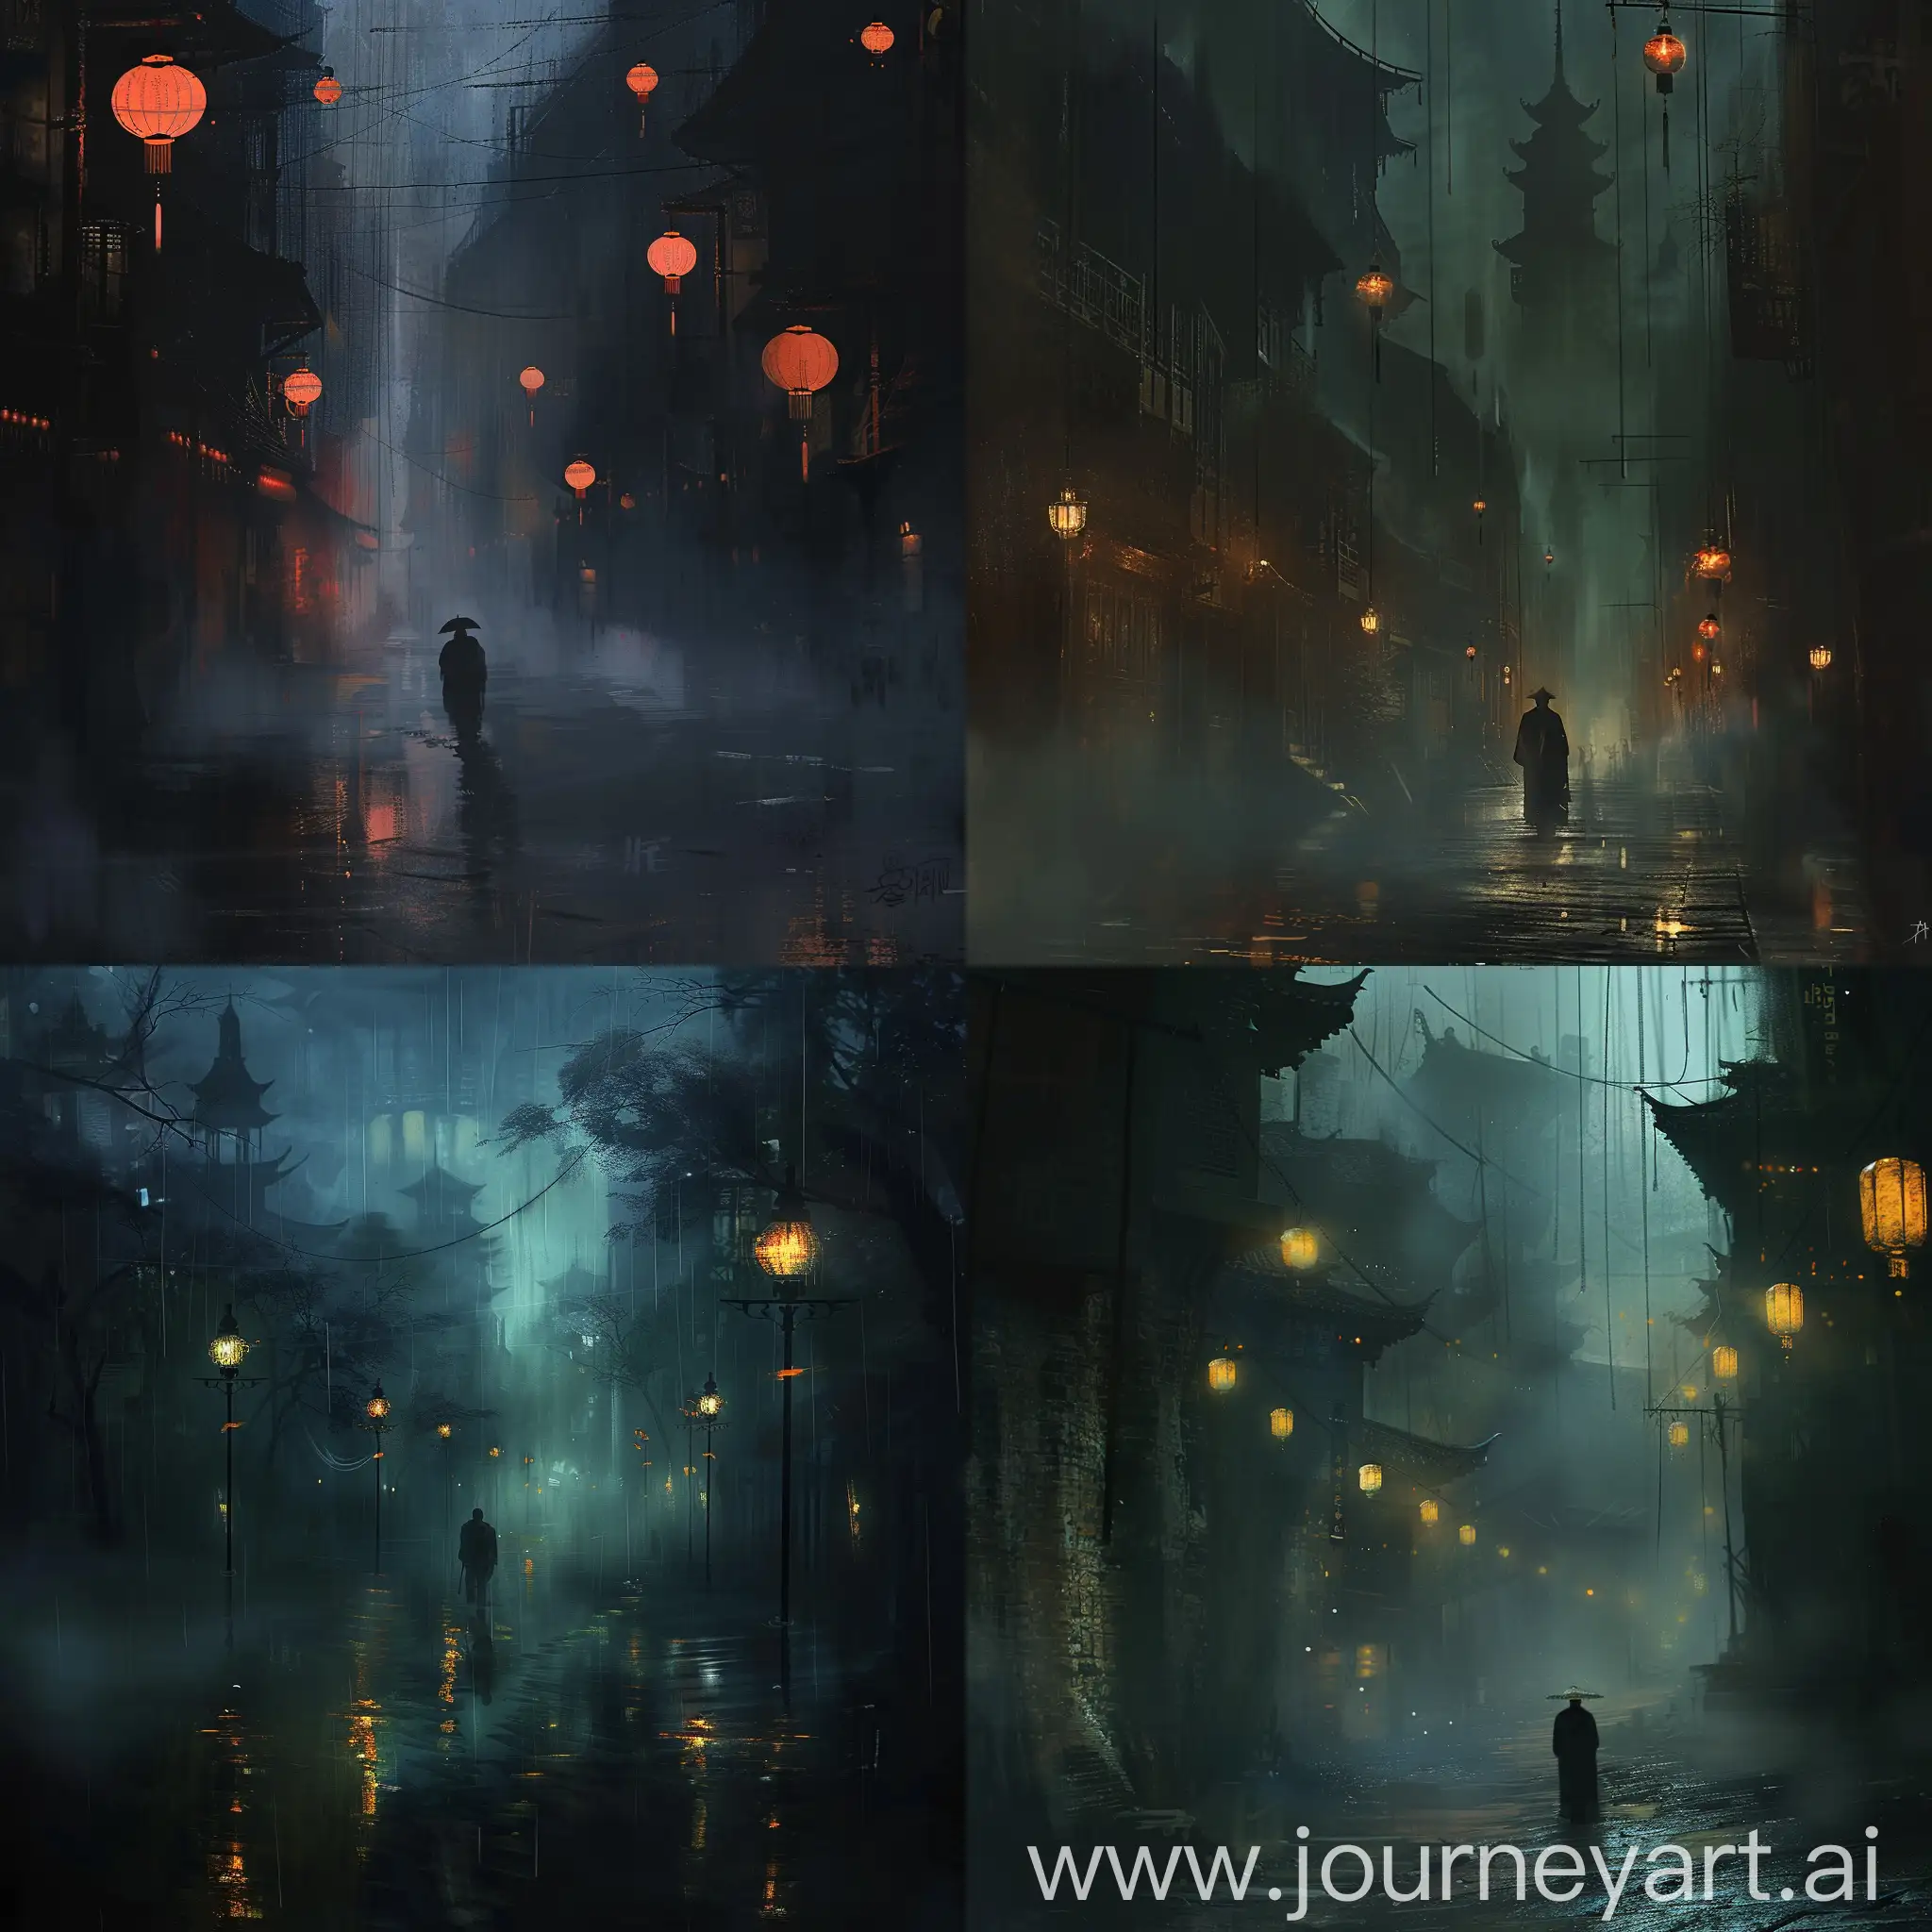 Solitary-Figure-in-Misty-Urban-Night